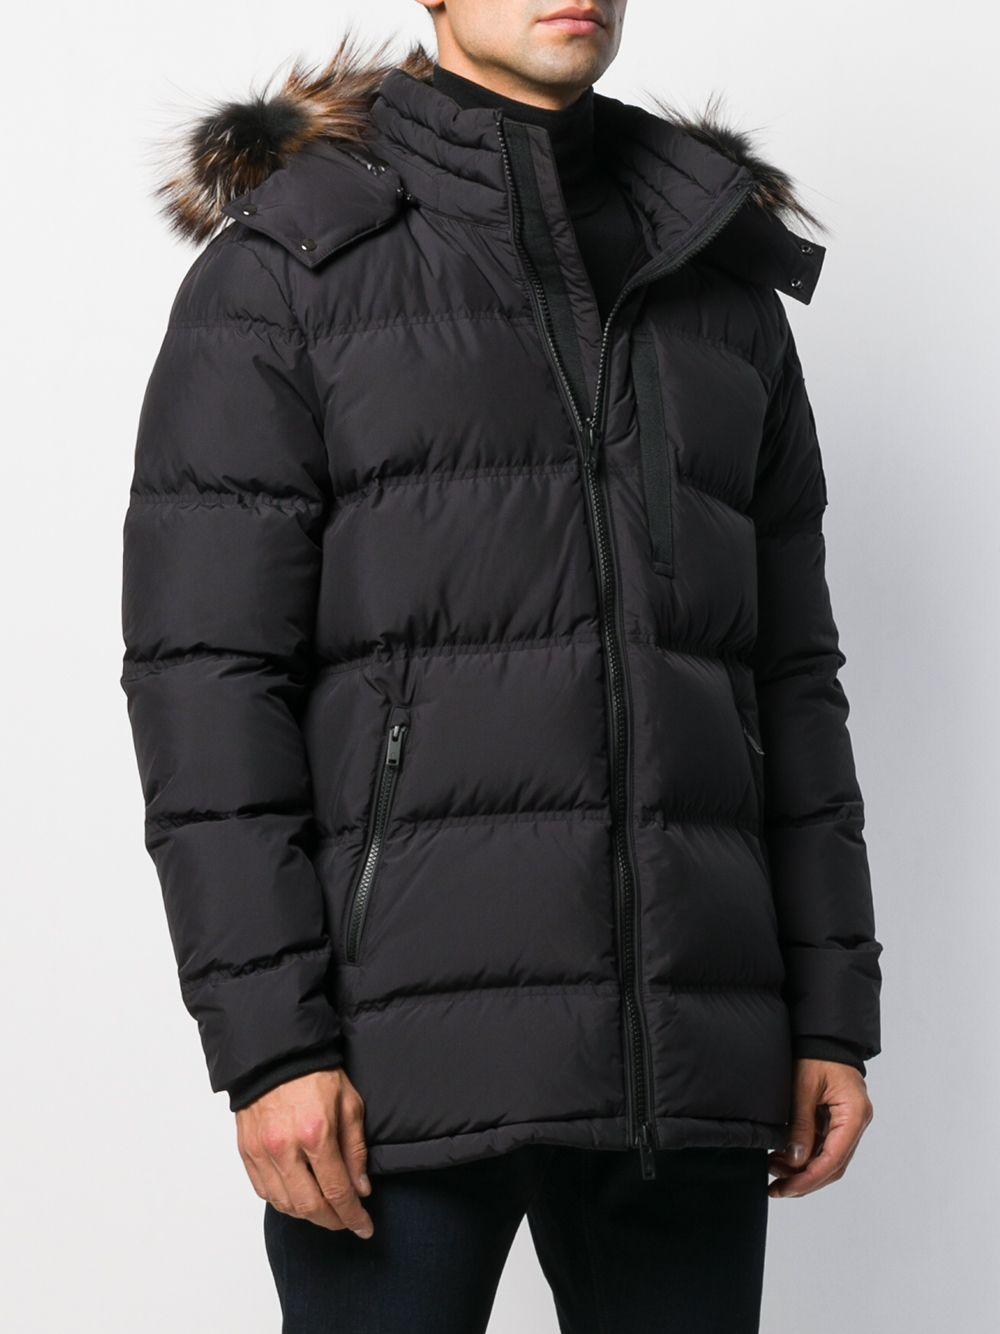 Moose Knuckles Southdale Winter Jacket in Black for Men - Lyst